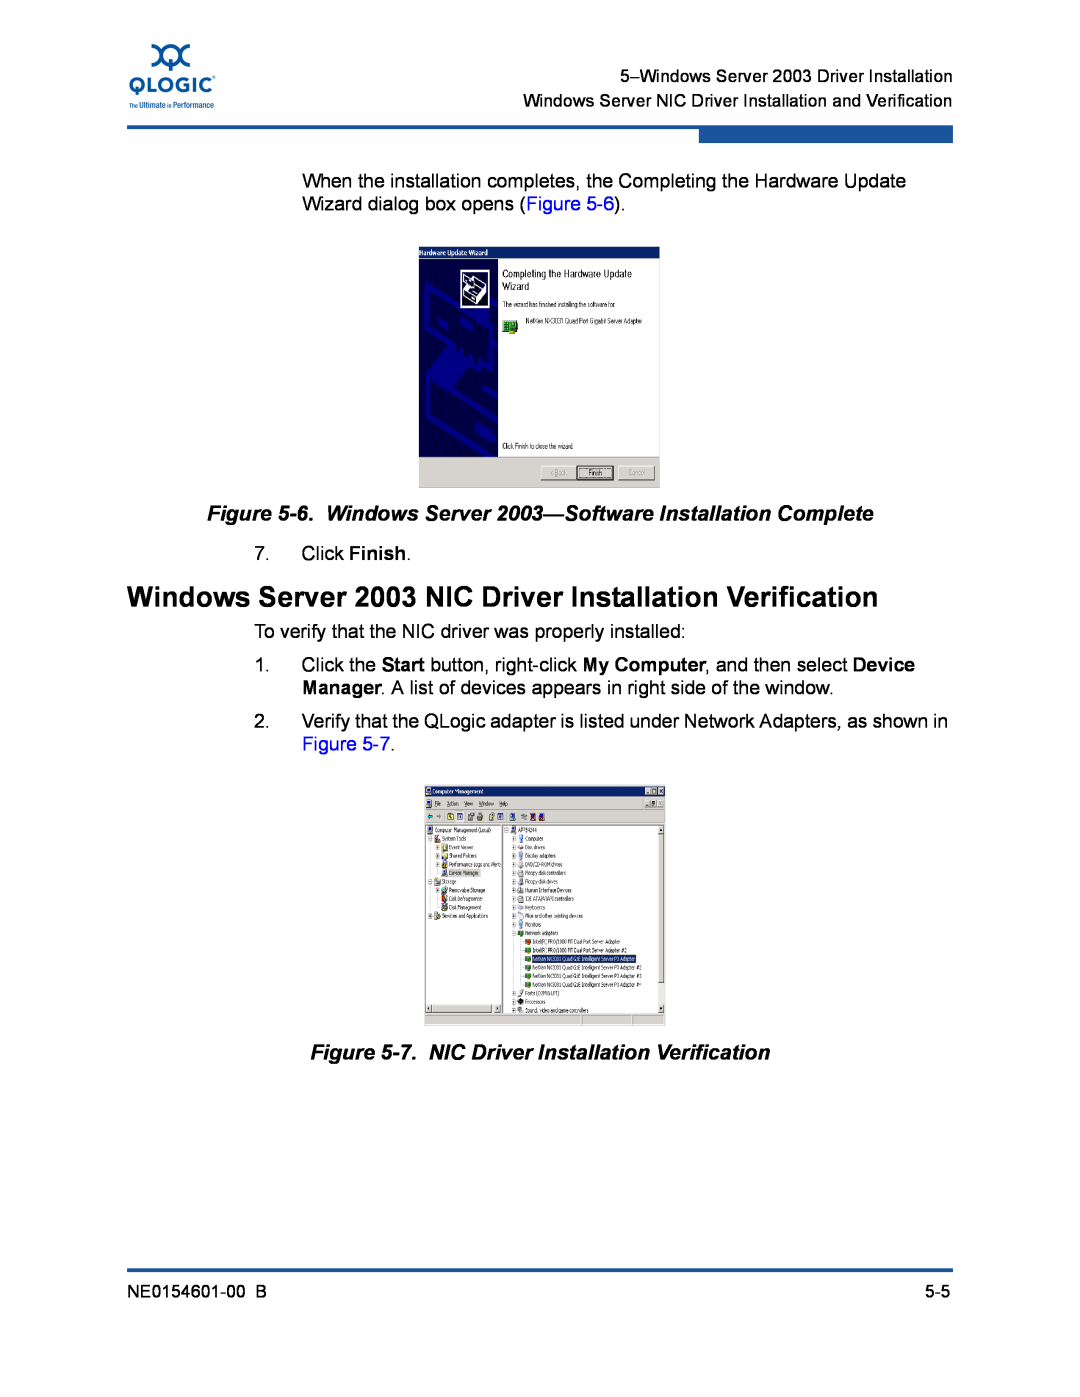 Q-Logic 3000, 3100 manual Windows Server 2003 NIC Driver Installation Verification, 7. NIC Driver Installation Verification 